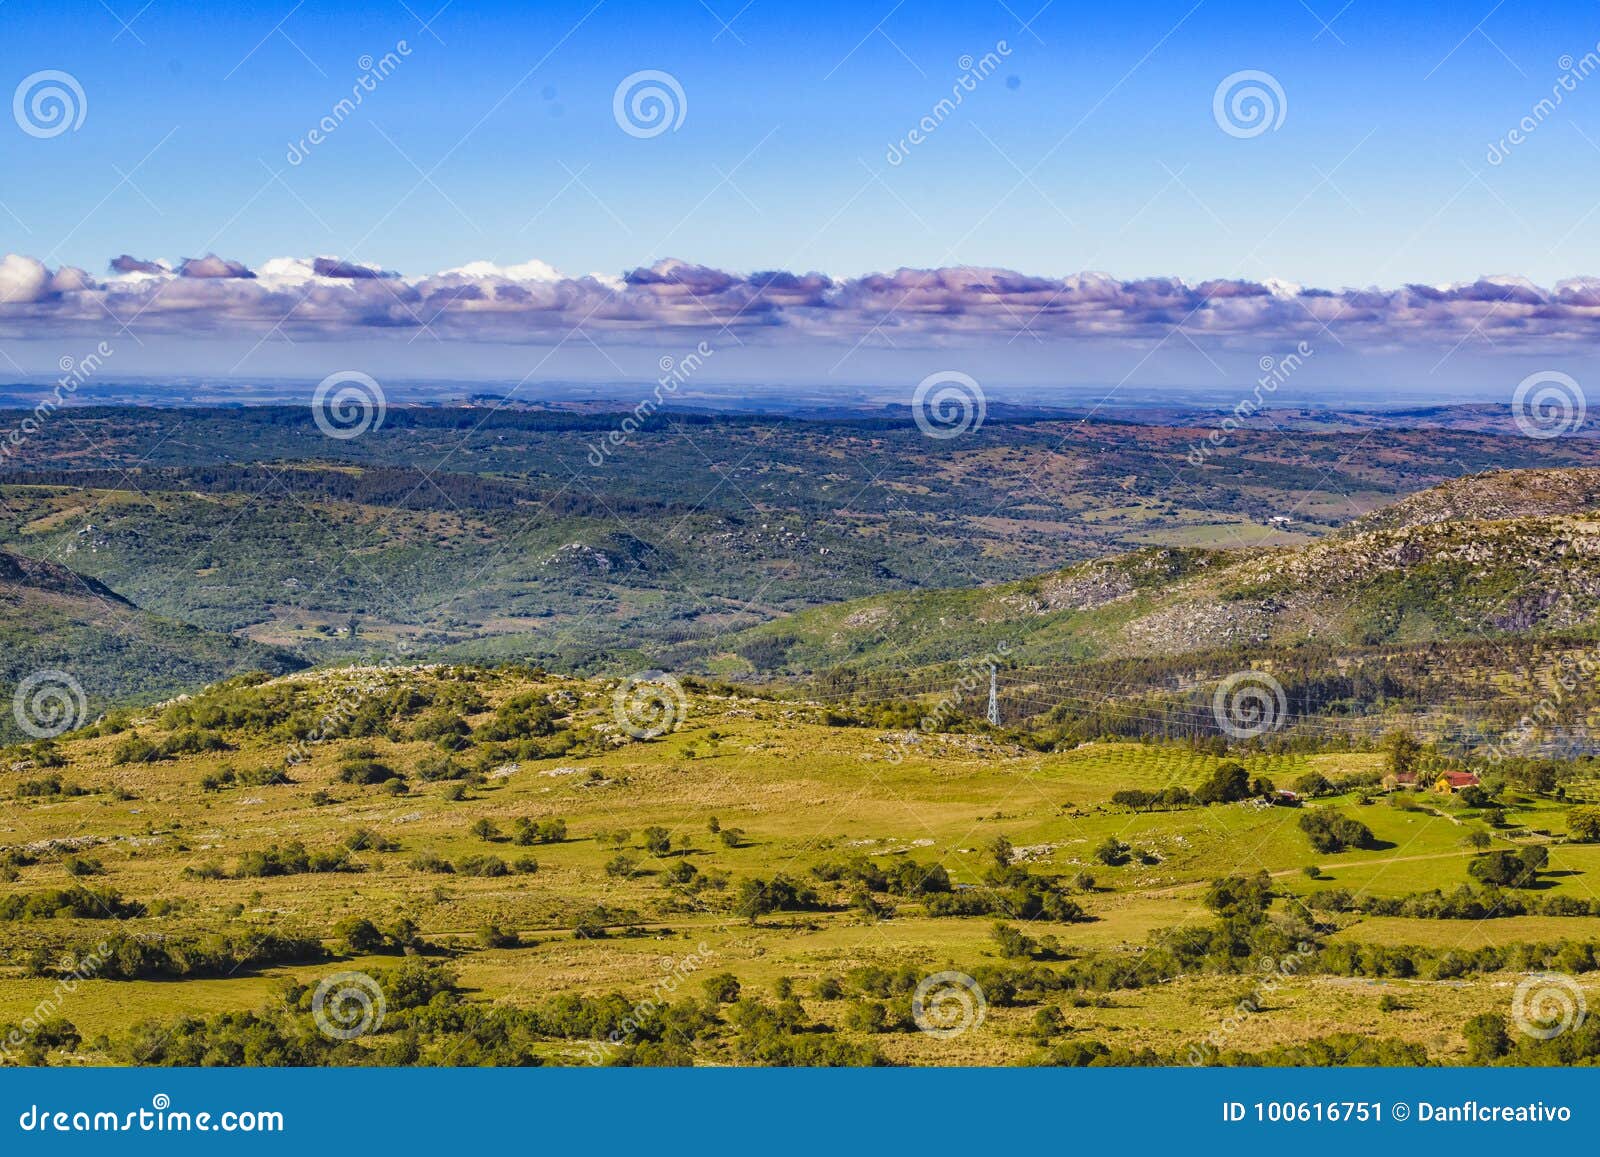 countryside scene aerial view, maldonado, uruguay